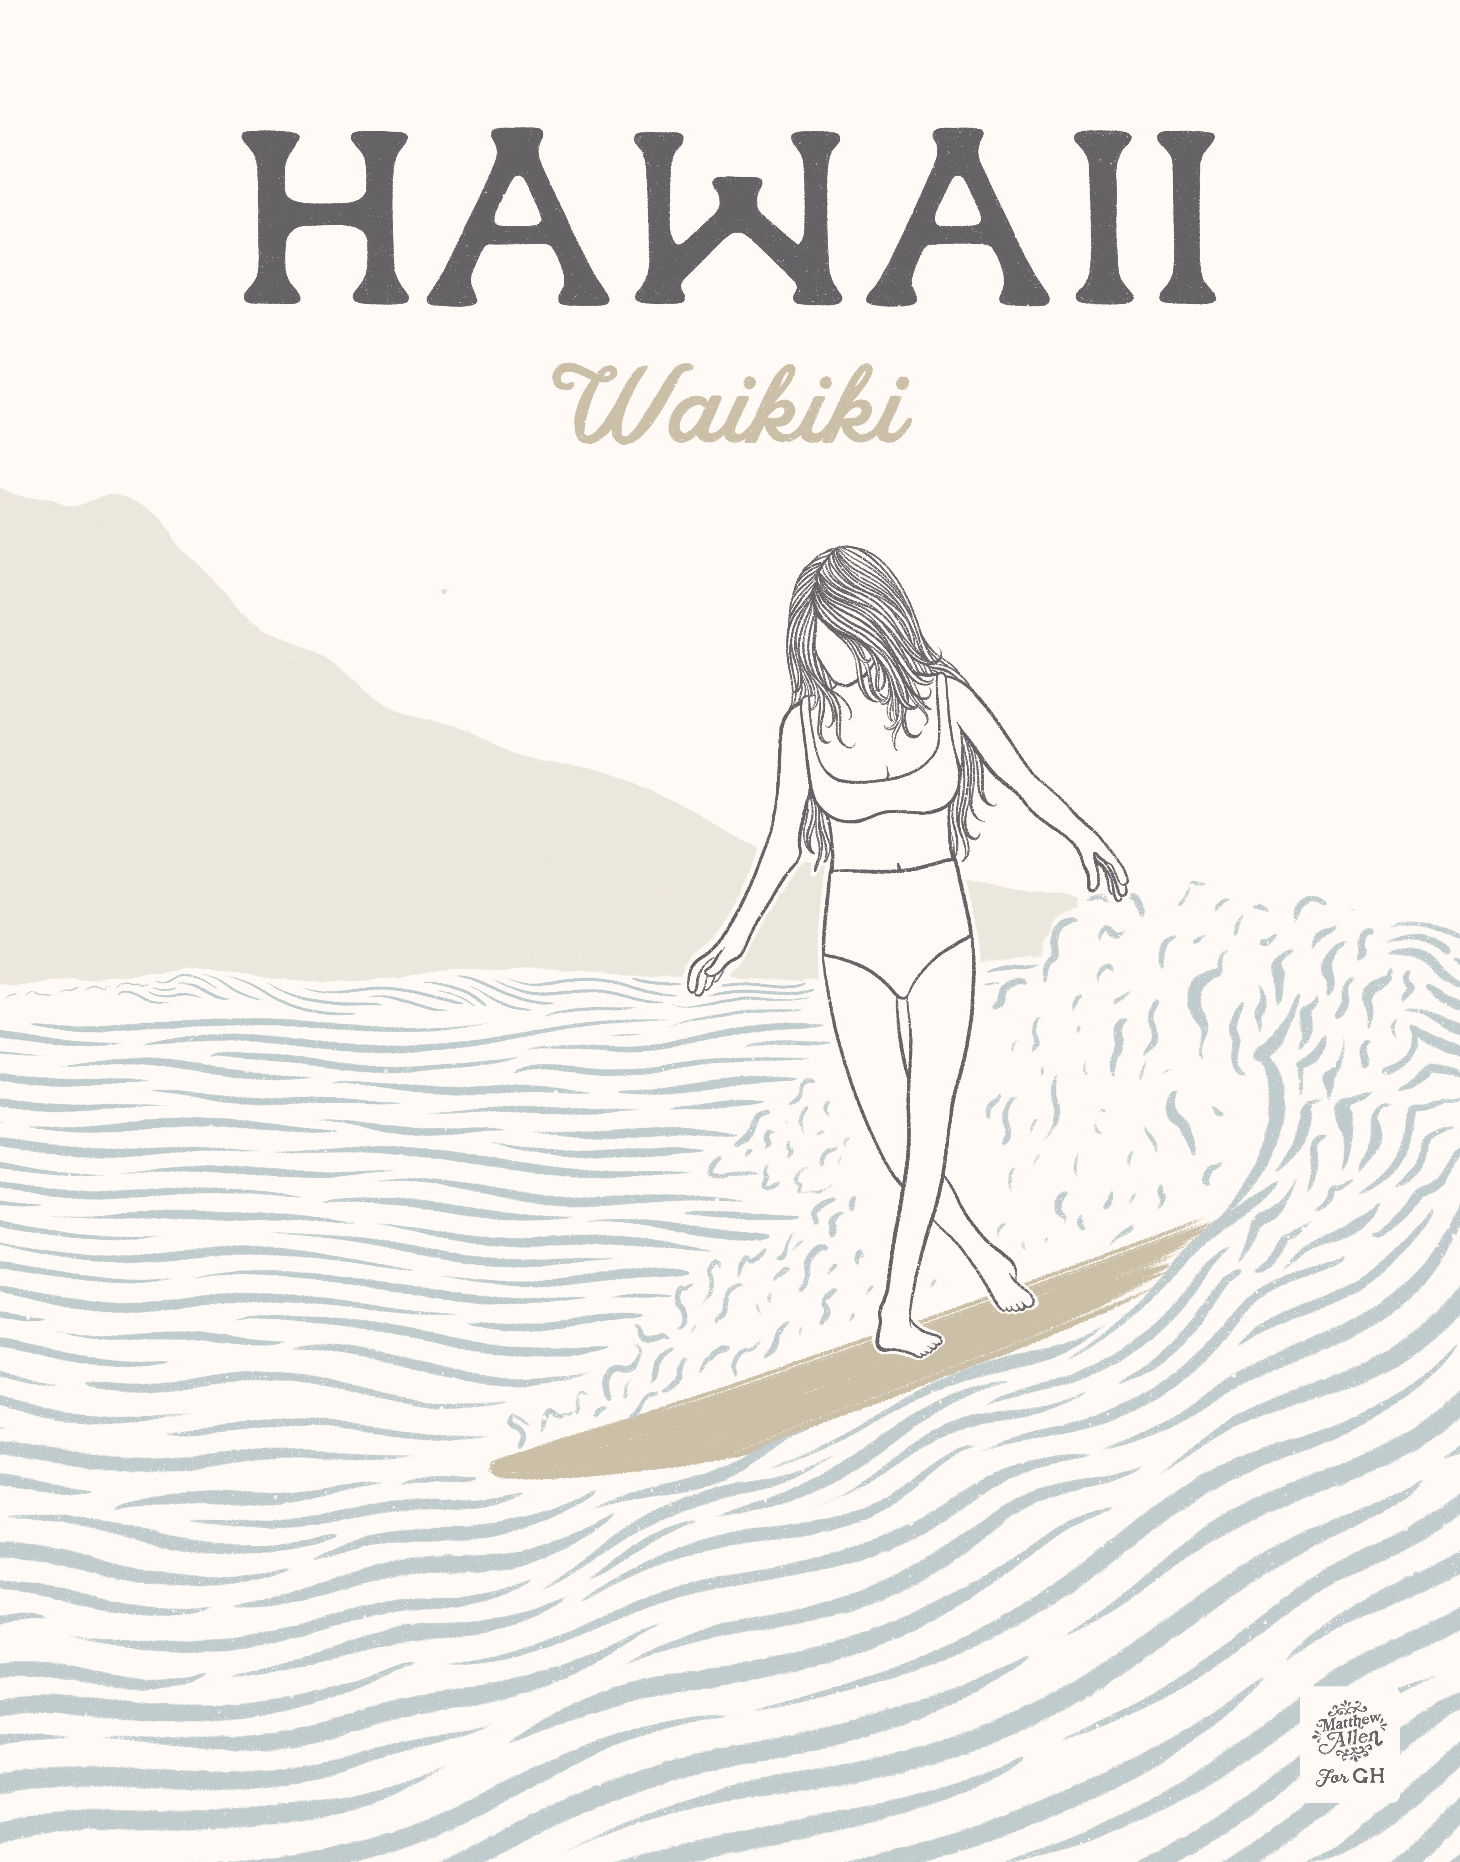 HAWAII Waikiki by Matthew Allen